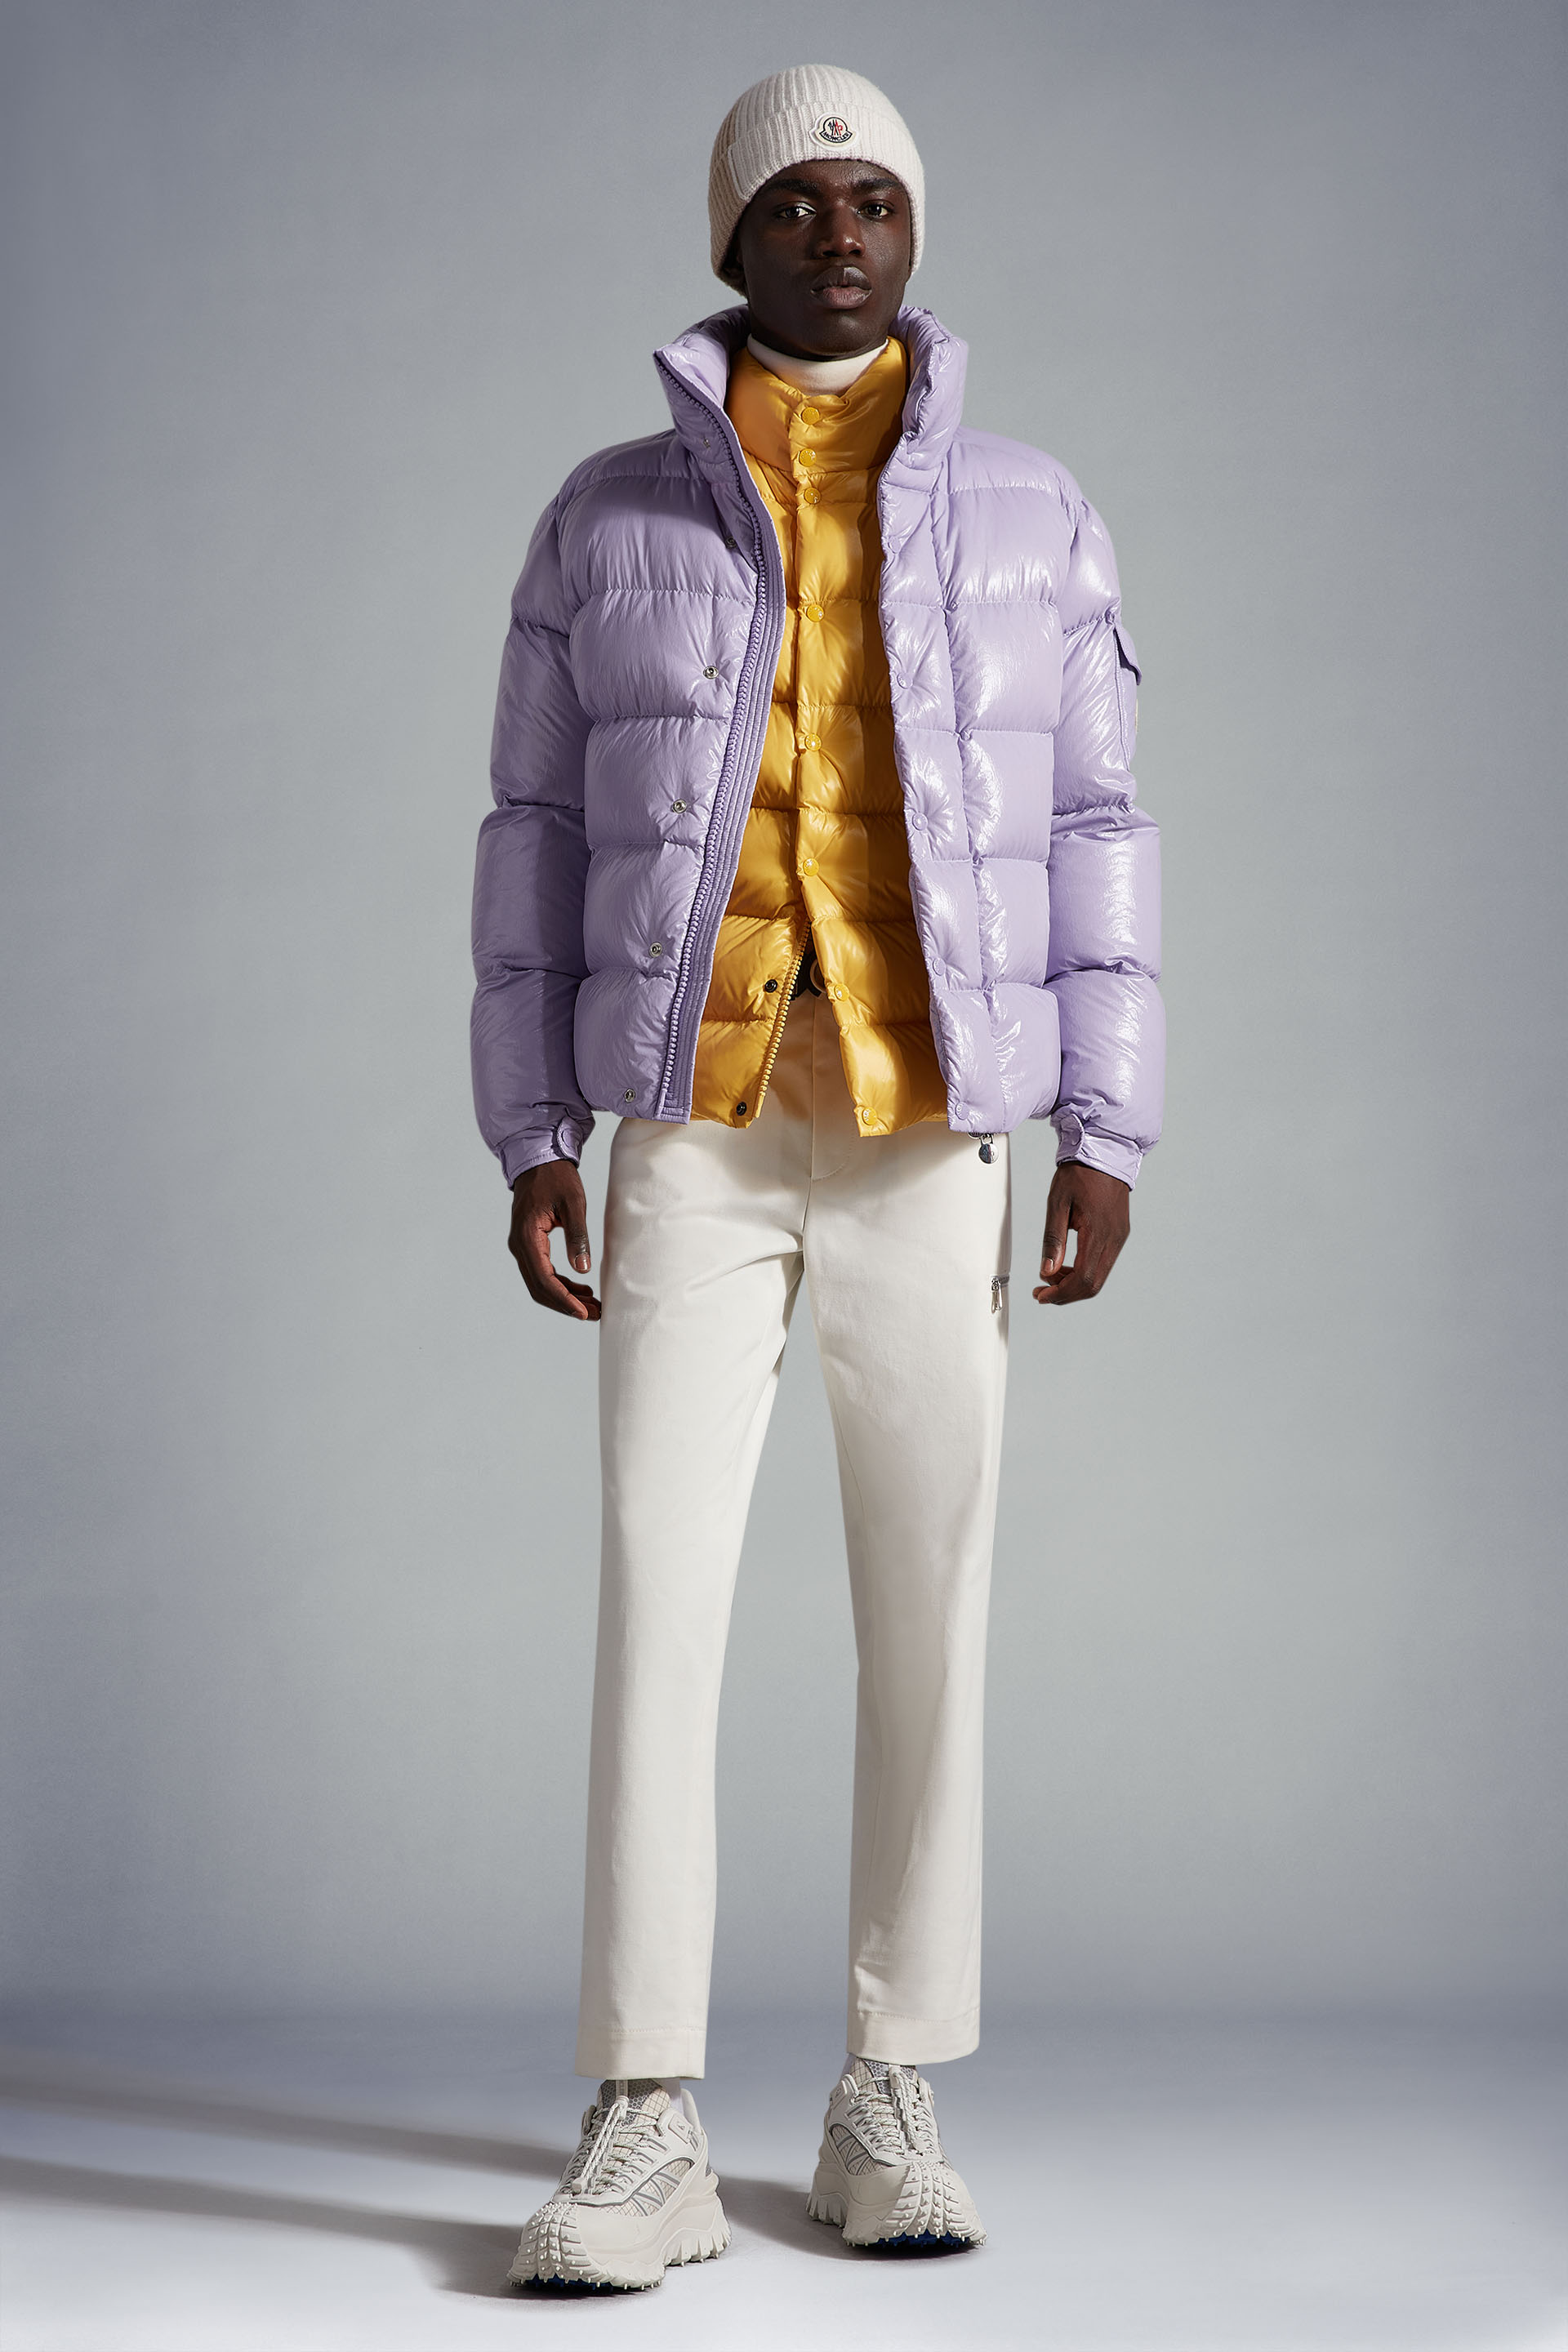 Moncler Maya 70冬季短款男士羽绒服夹克外套薰衣草紫色– 短款羽绒服